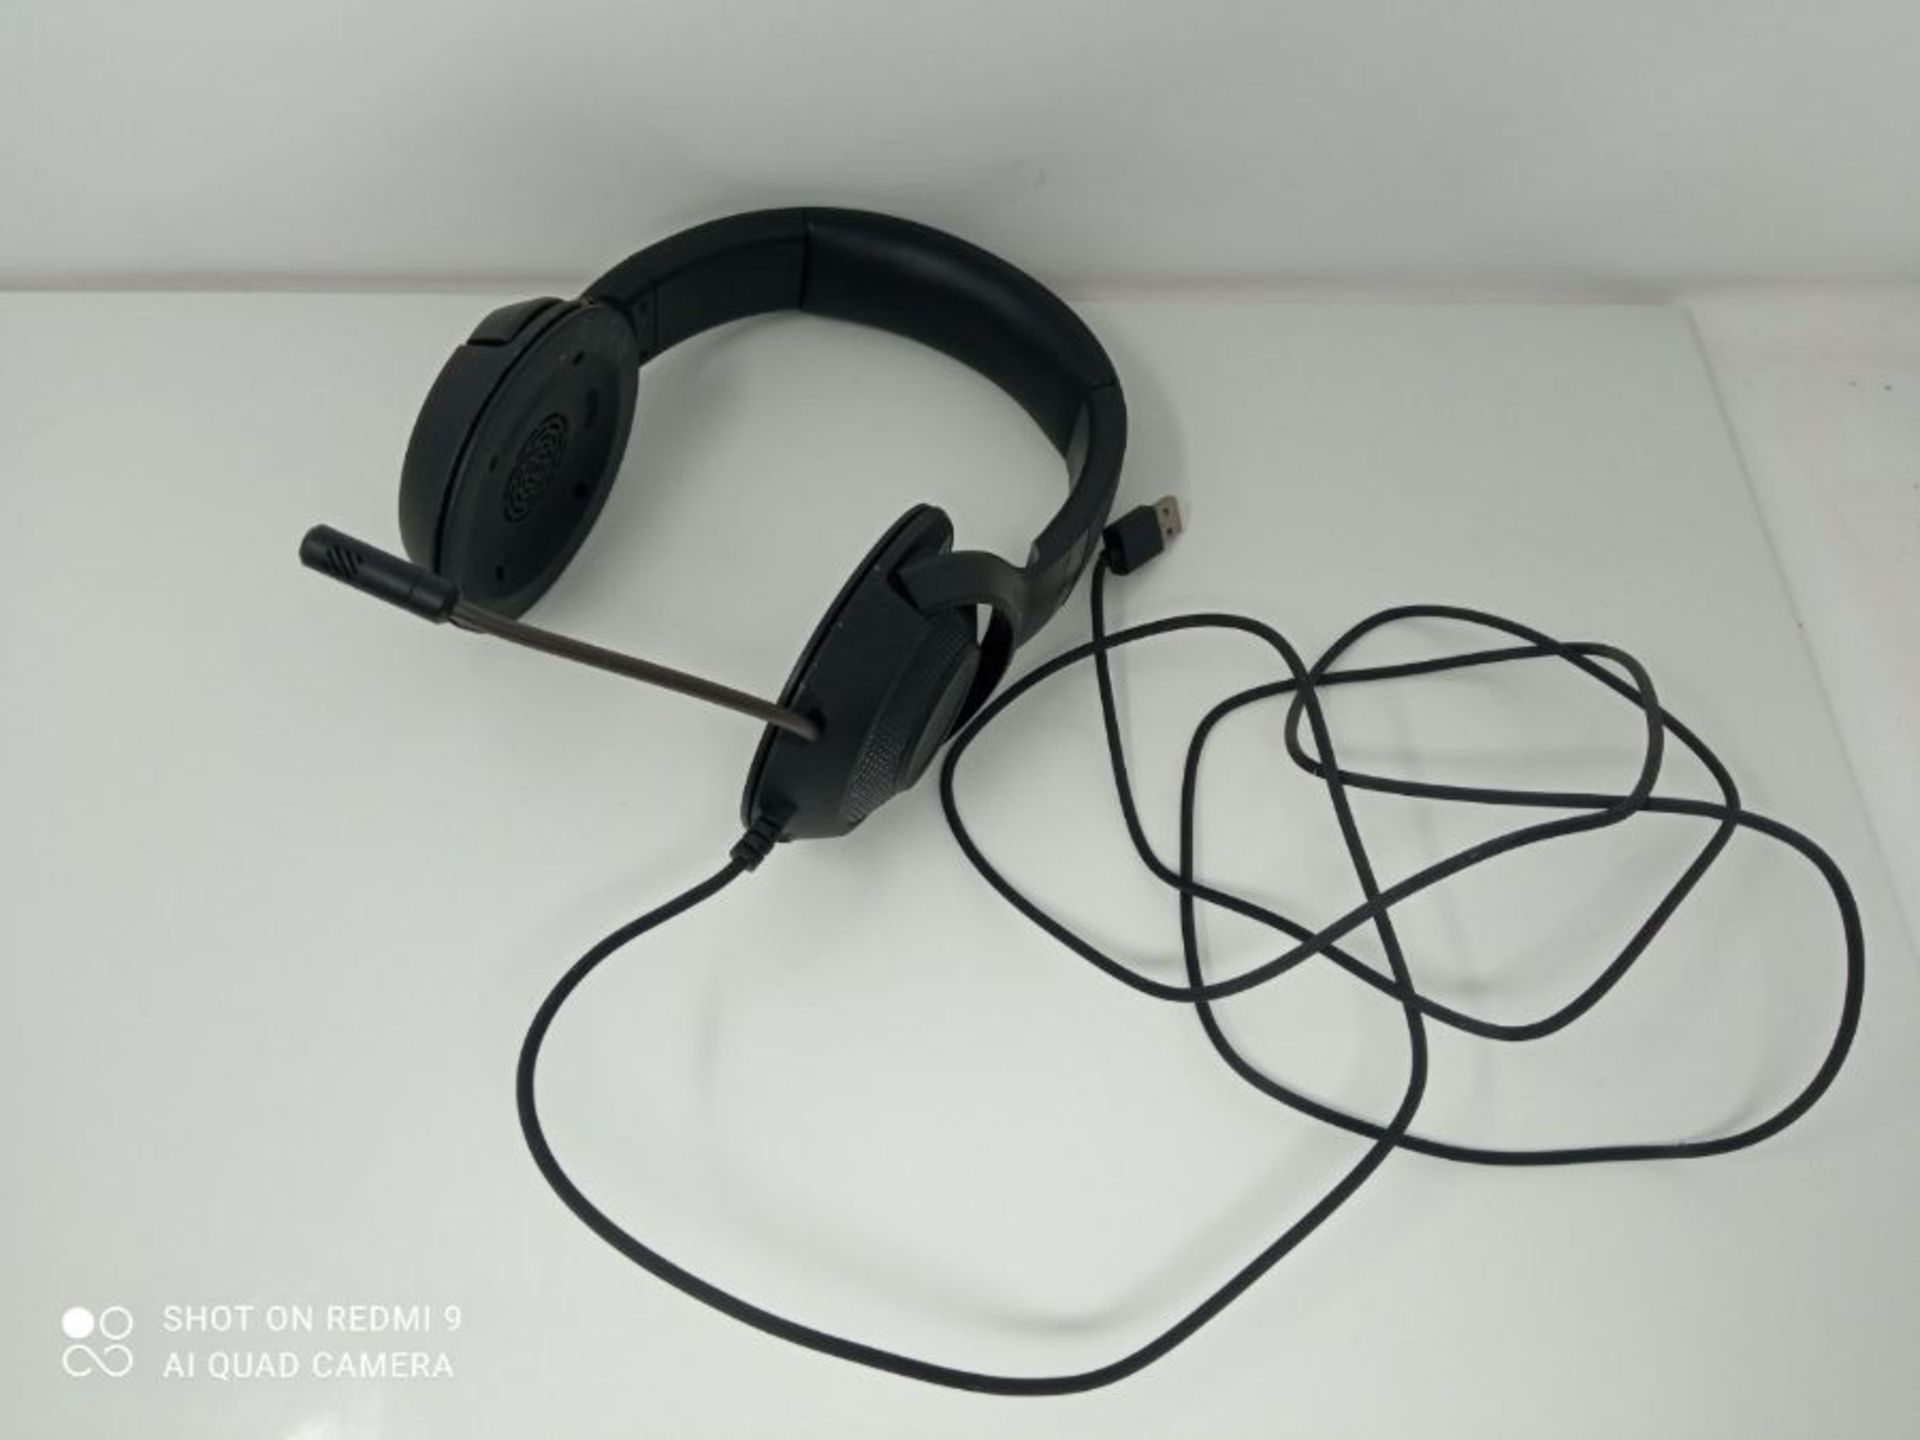 Razer Kraken x USB - Digital Surround Sound Gaming USB-Headset - Image 2 of 2